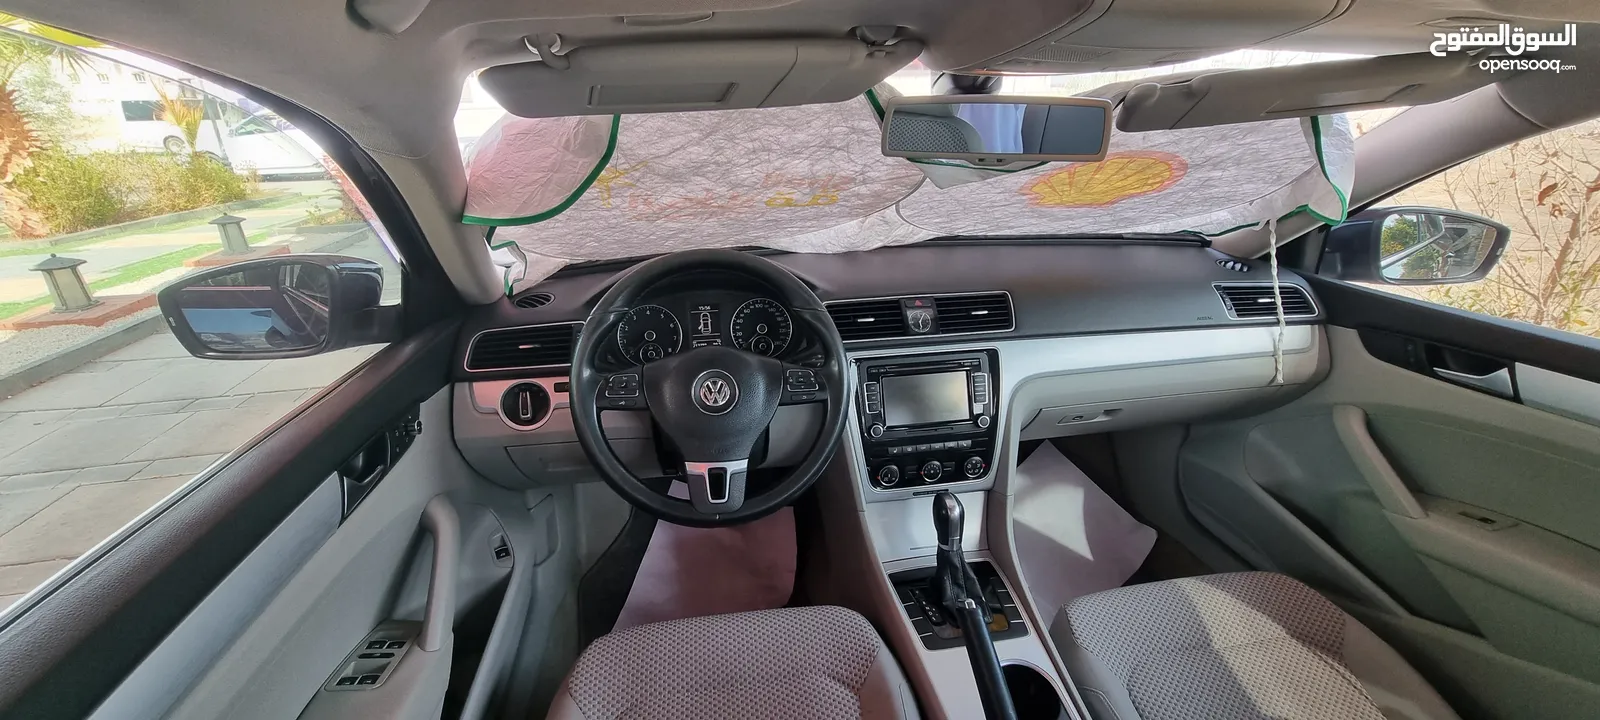 Volkswagen Passat 2013 without sunroof